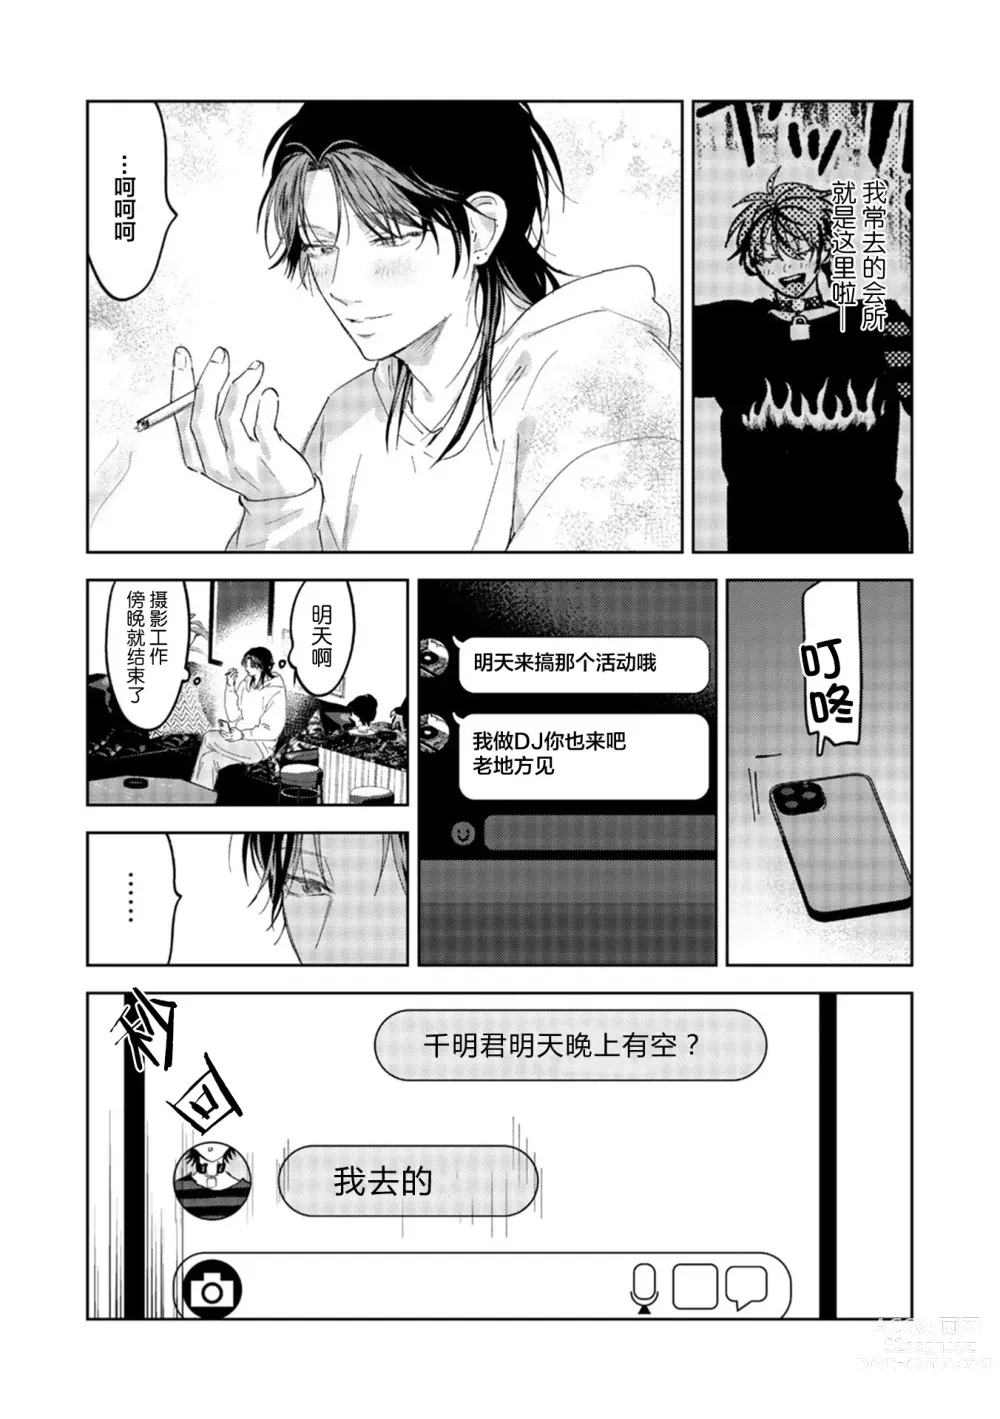 Page 23 of manga 朋克三角 2